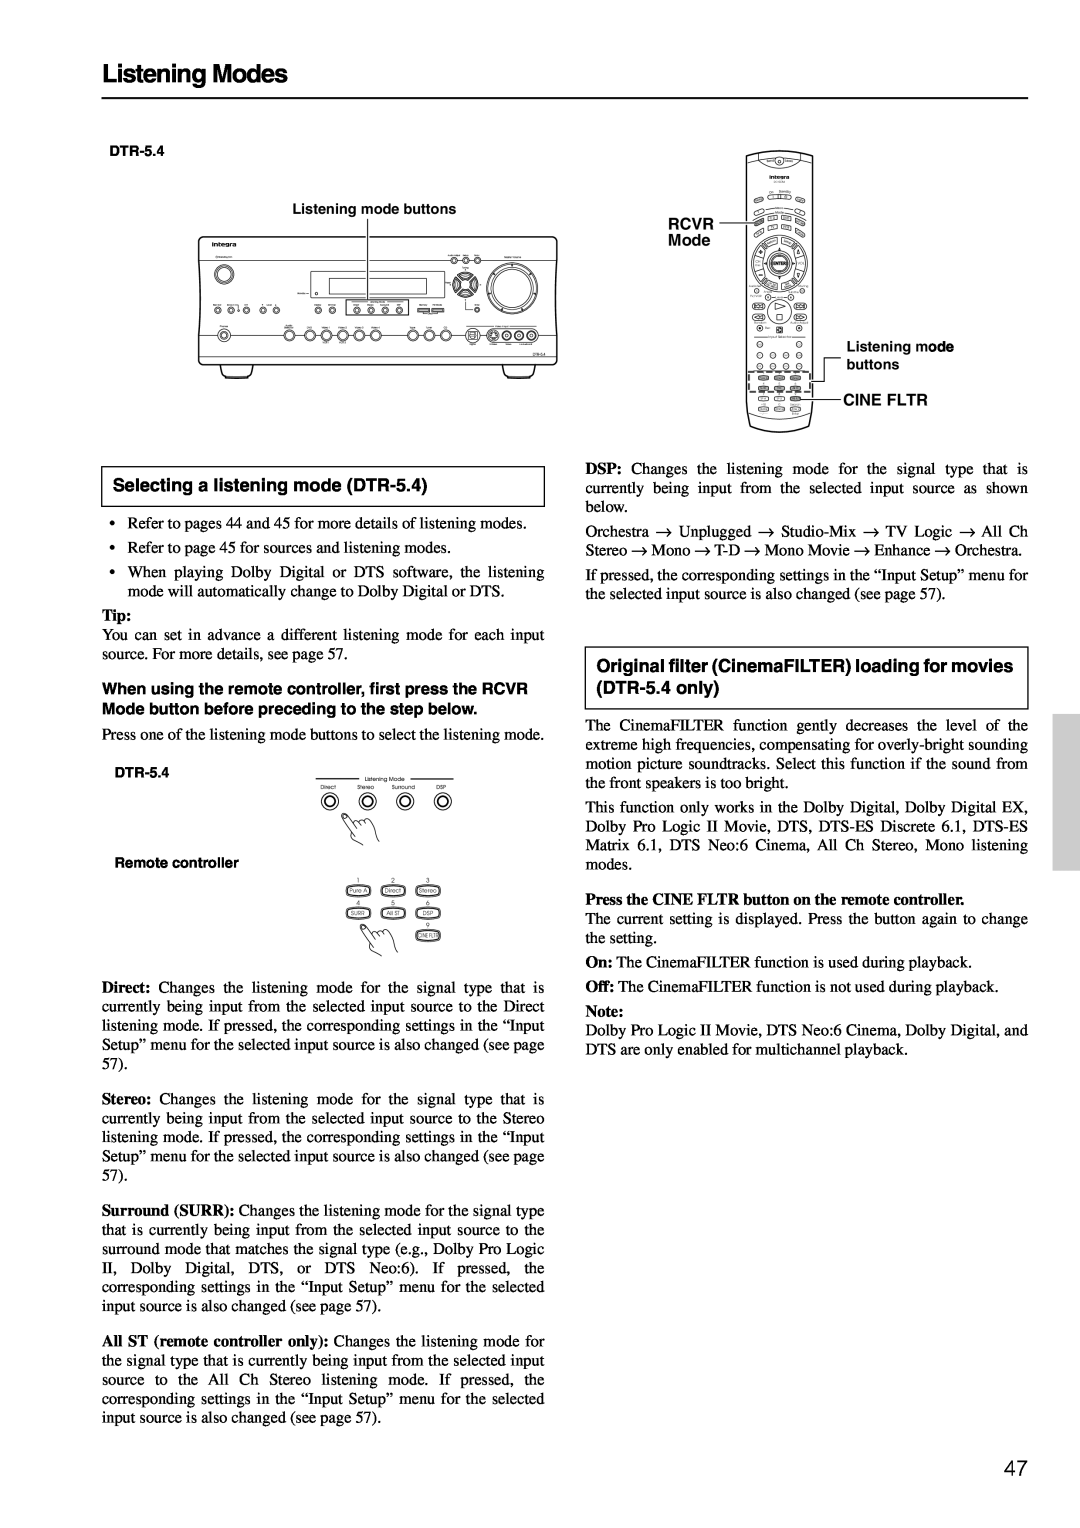 Integra DTR-6.4/5.4 instruction manual Selecting a listening mode DTR-5.4, Listening Modes 